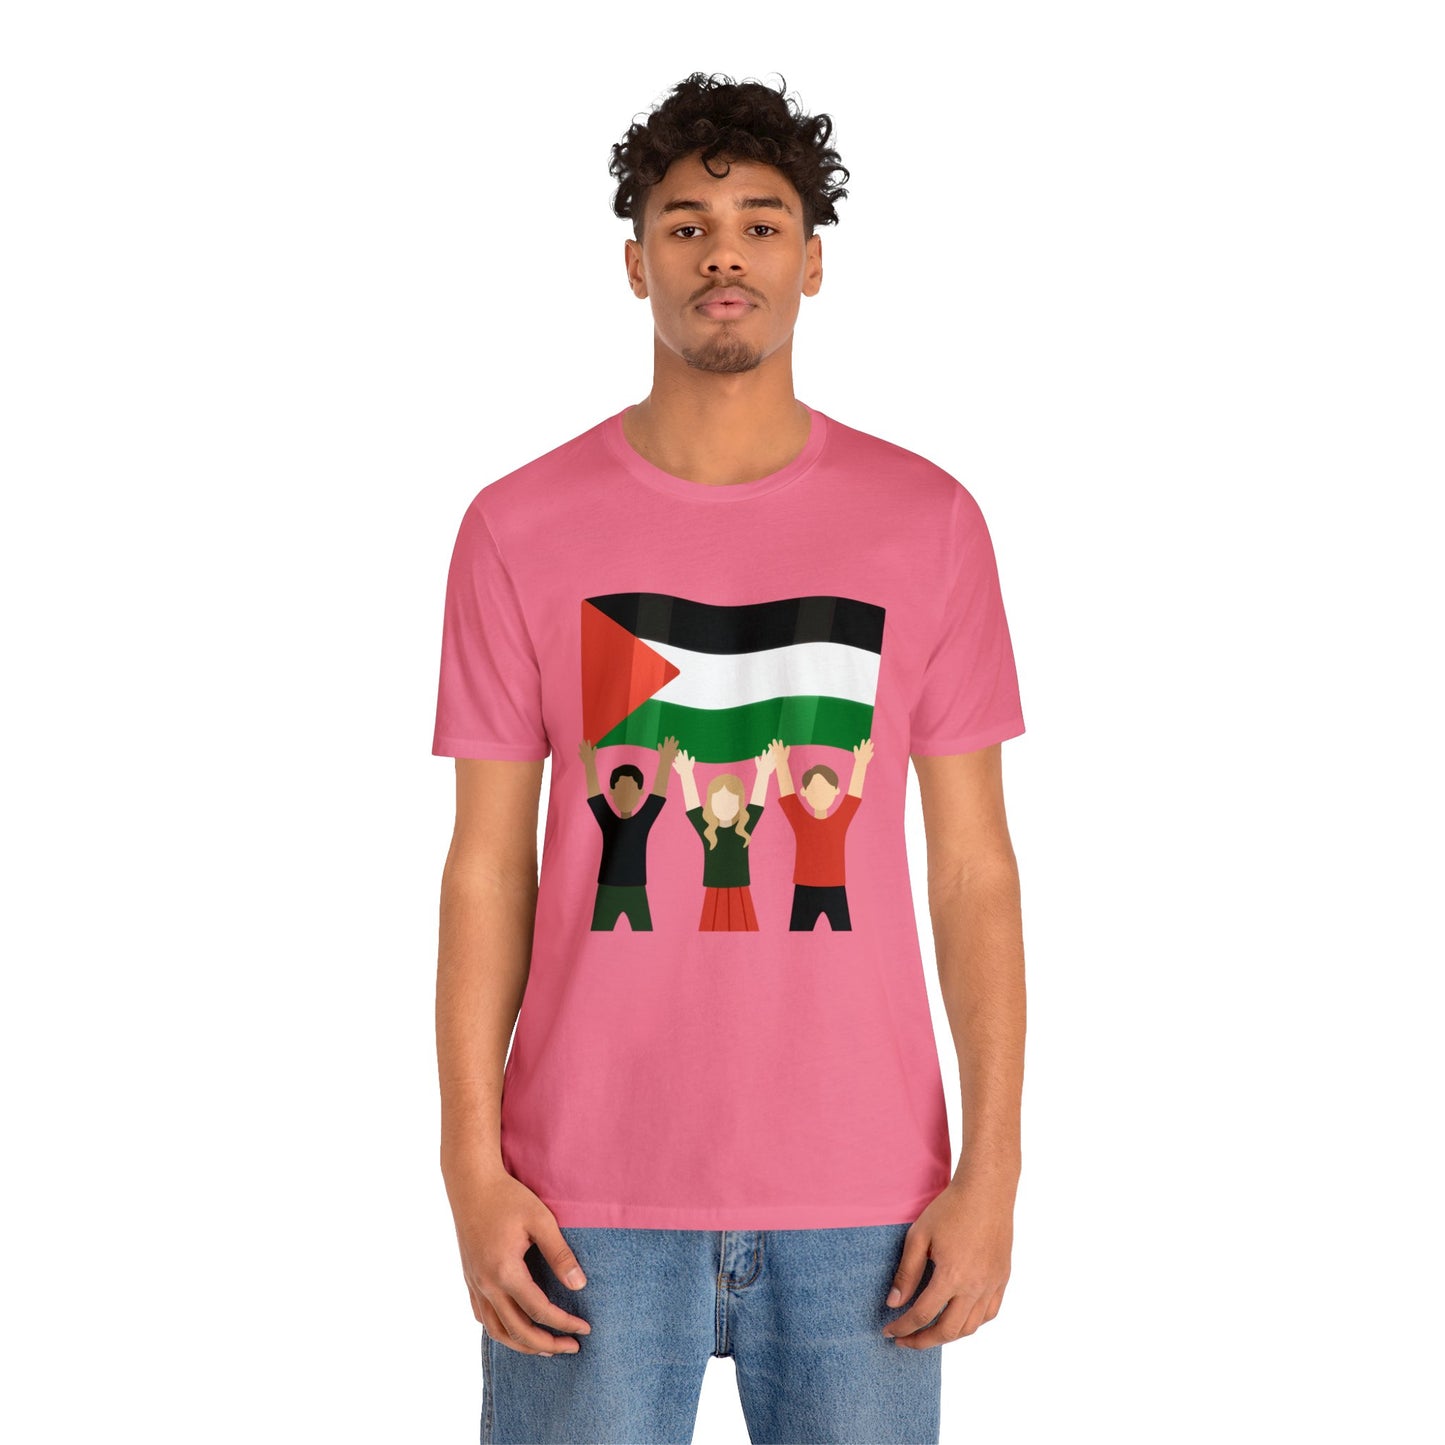 Palestine flag with kids Unisex Jersey Short Sleeve Tee